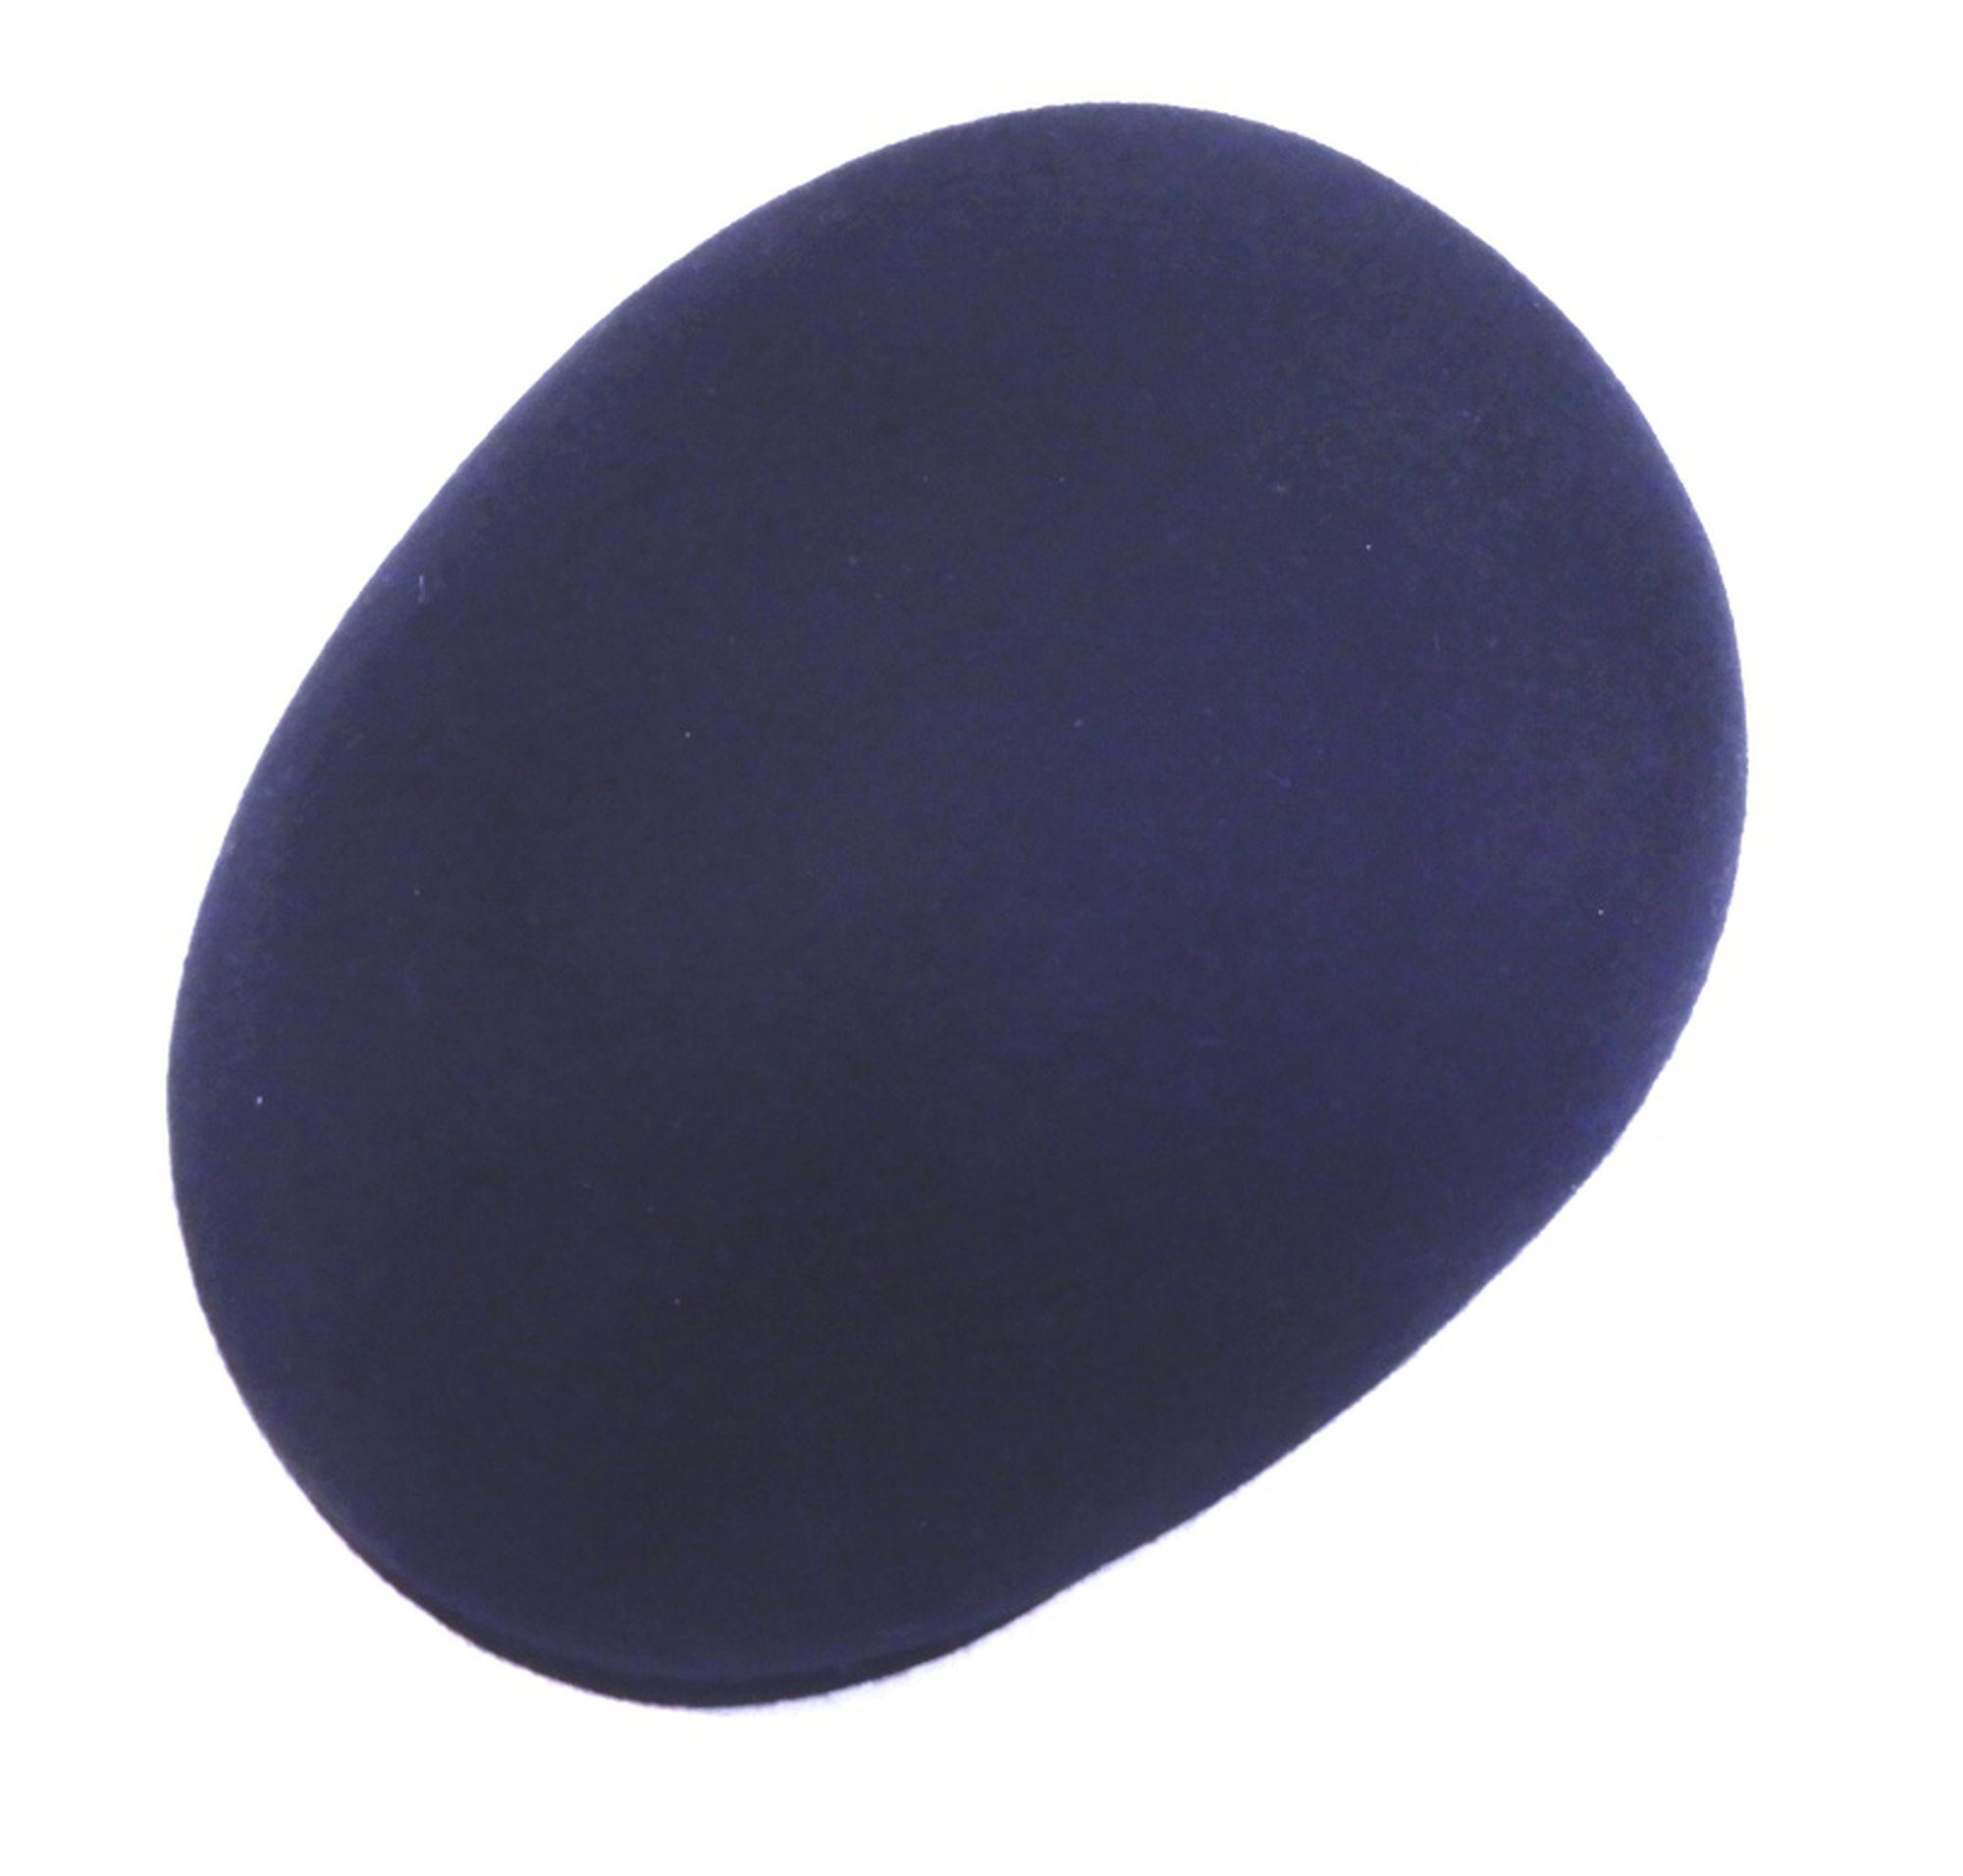 Flat Wollfilz Chaplino Cap dunkelblau aus hochwertigem